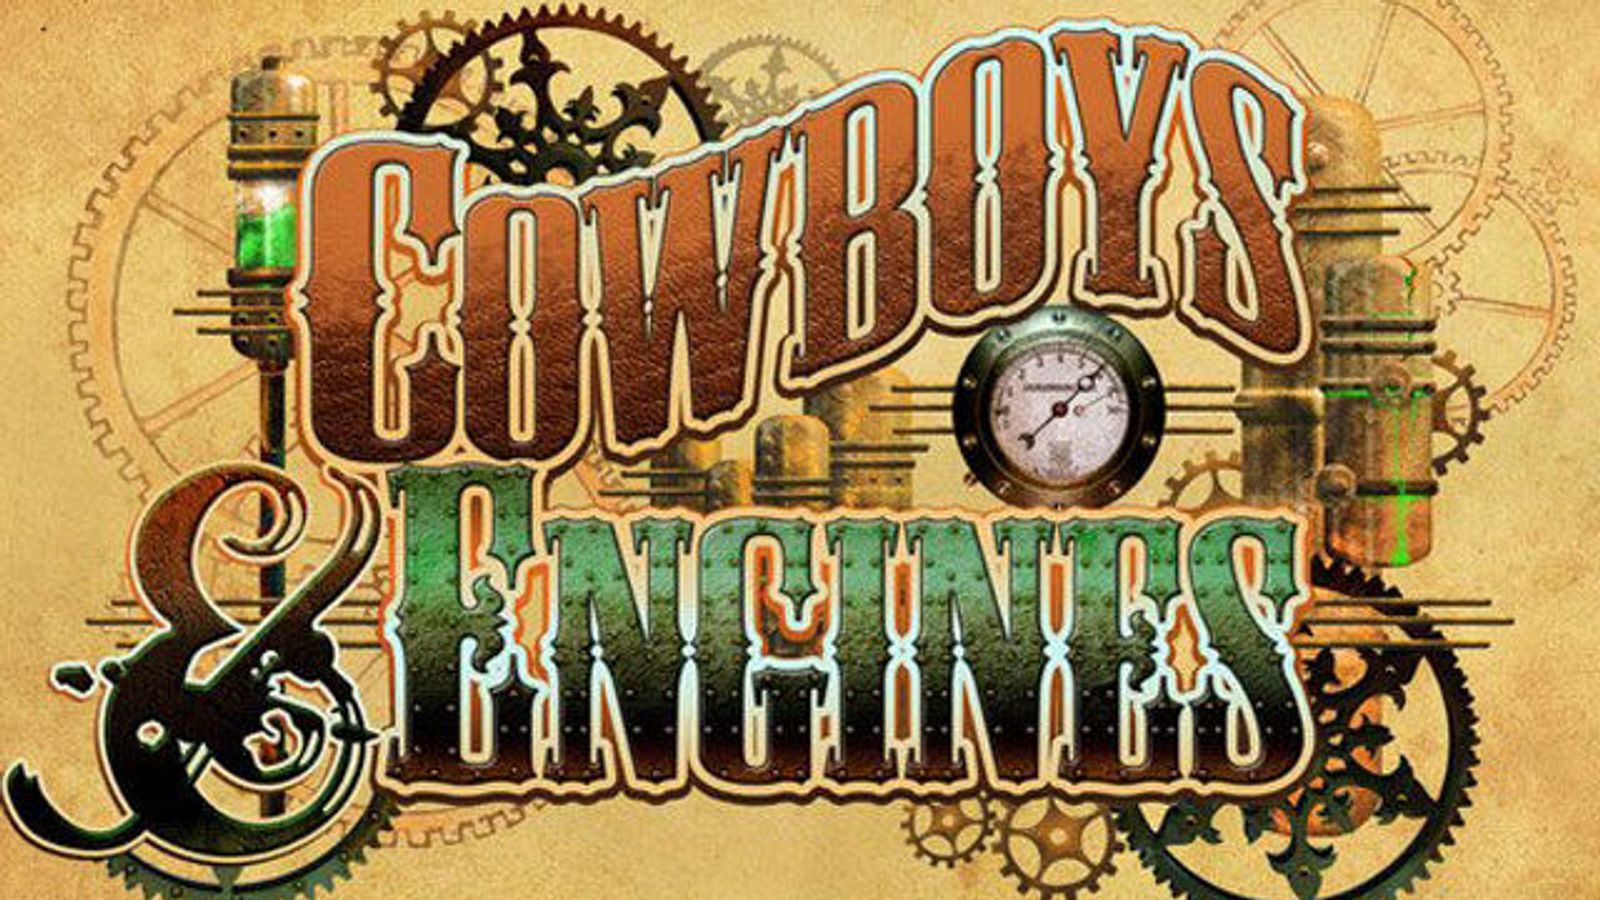 'Cowboys & Engines' Screens Tonight at Landmark Theatre in LA